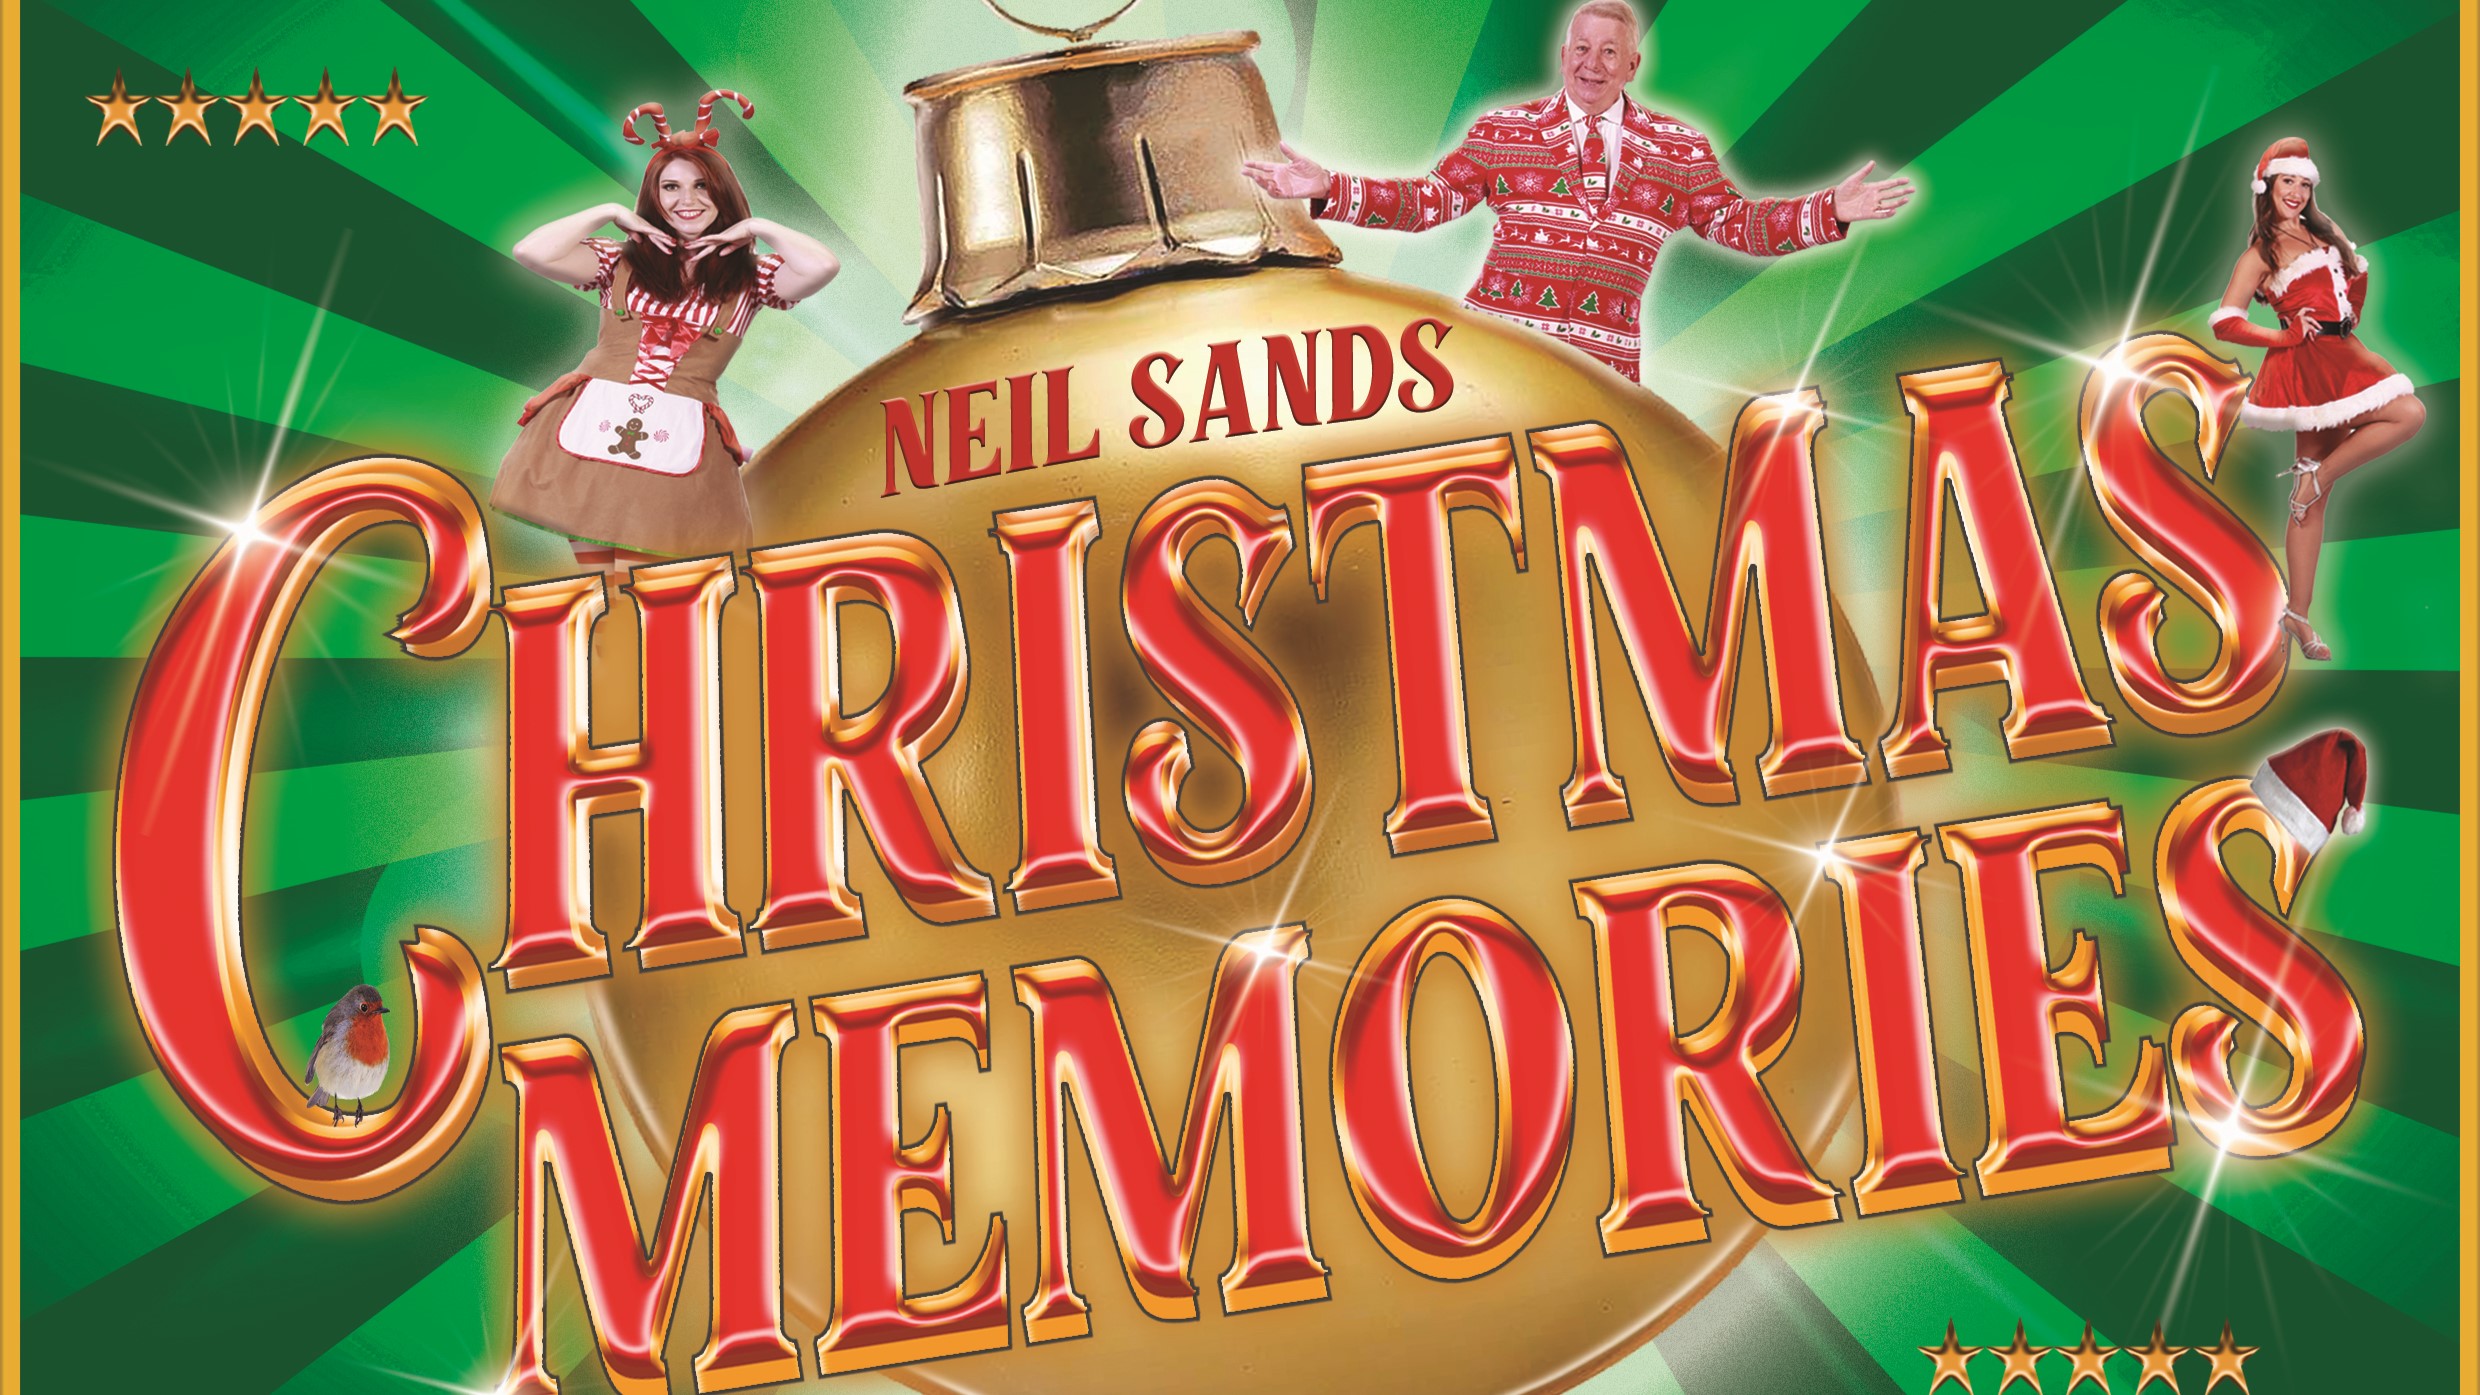 Neil Sands: Christmas Memories